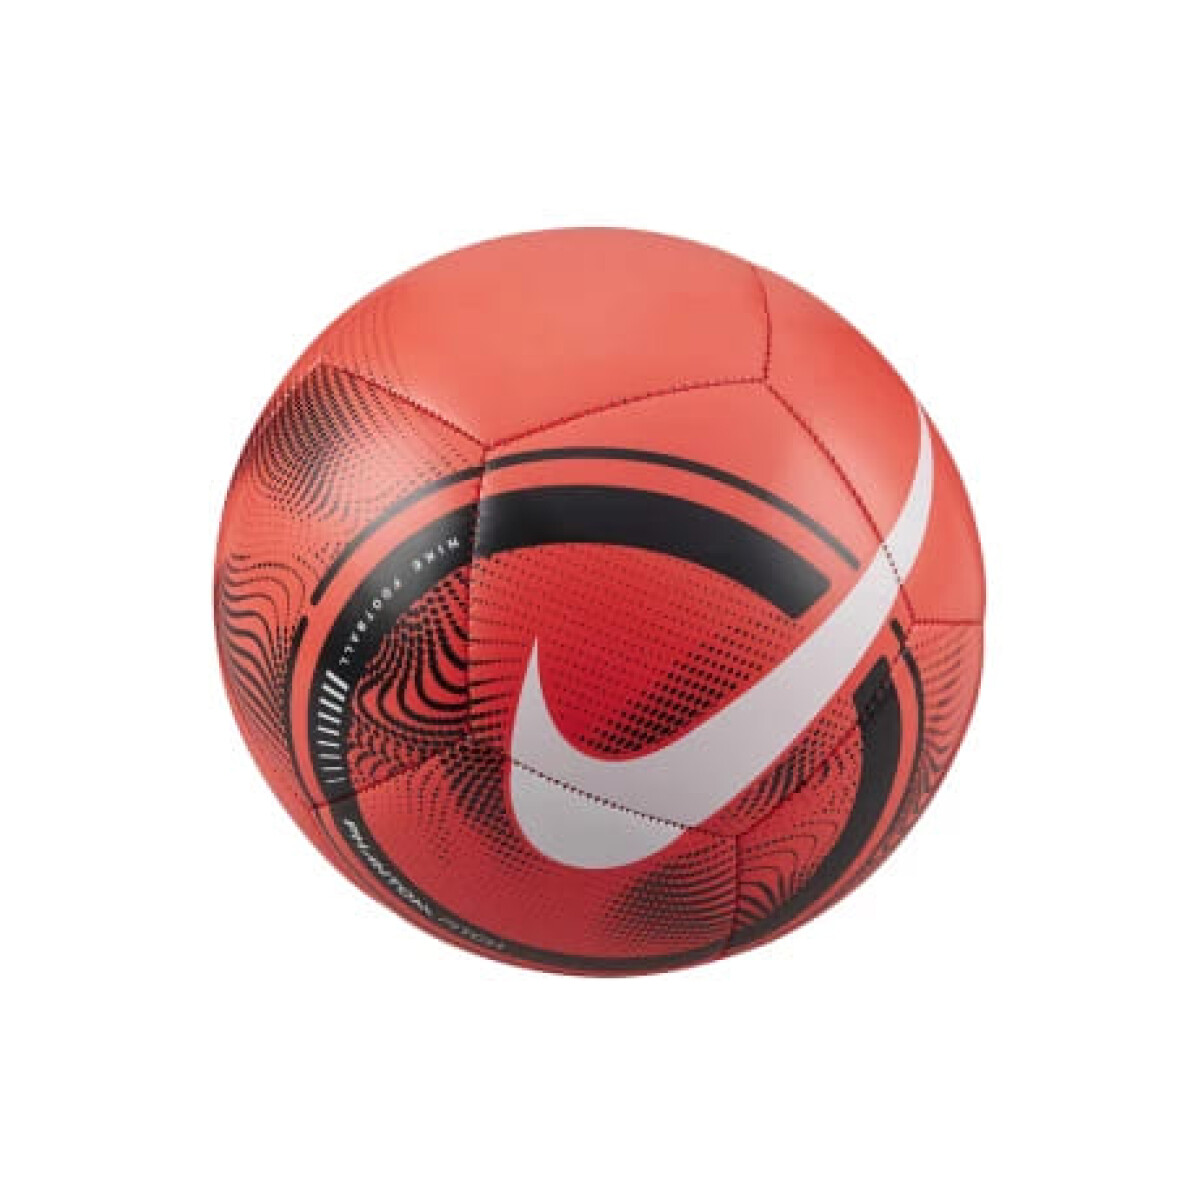 Pelota Nike Futbol Phantom Bright Crimson/Black - S/C 